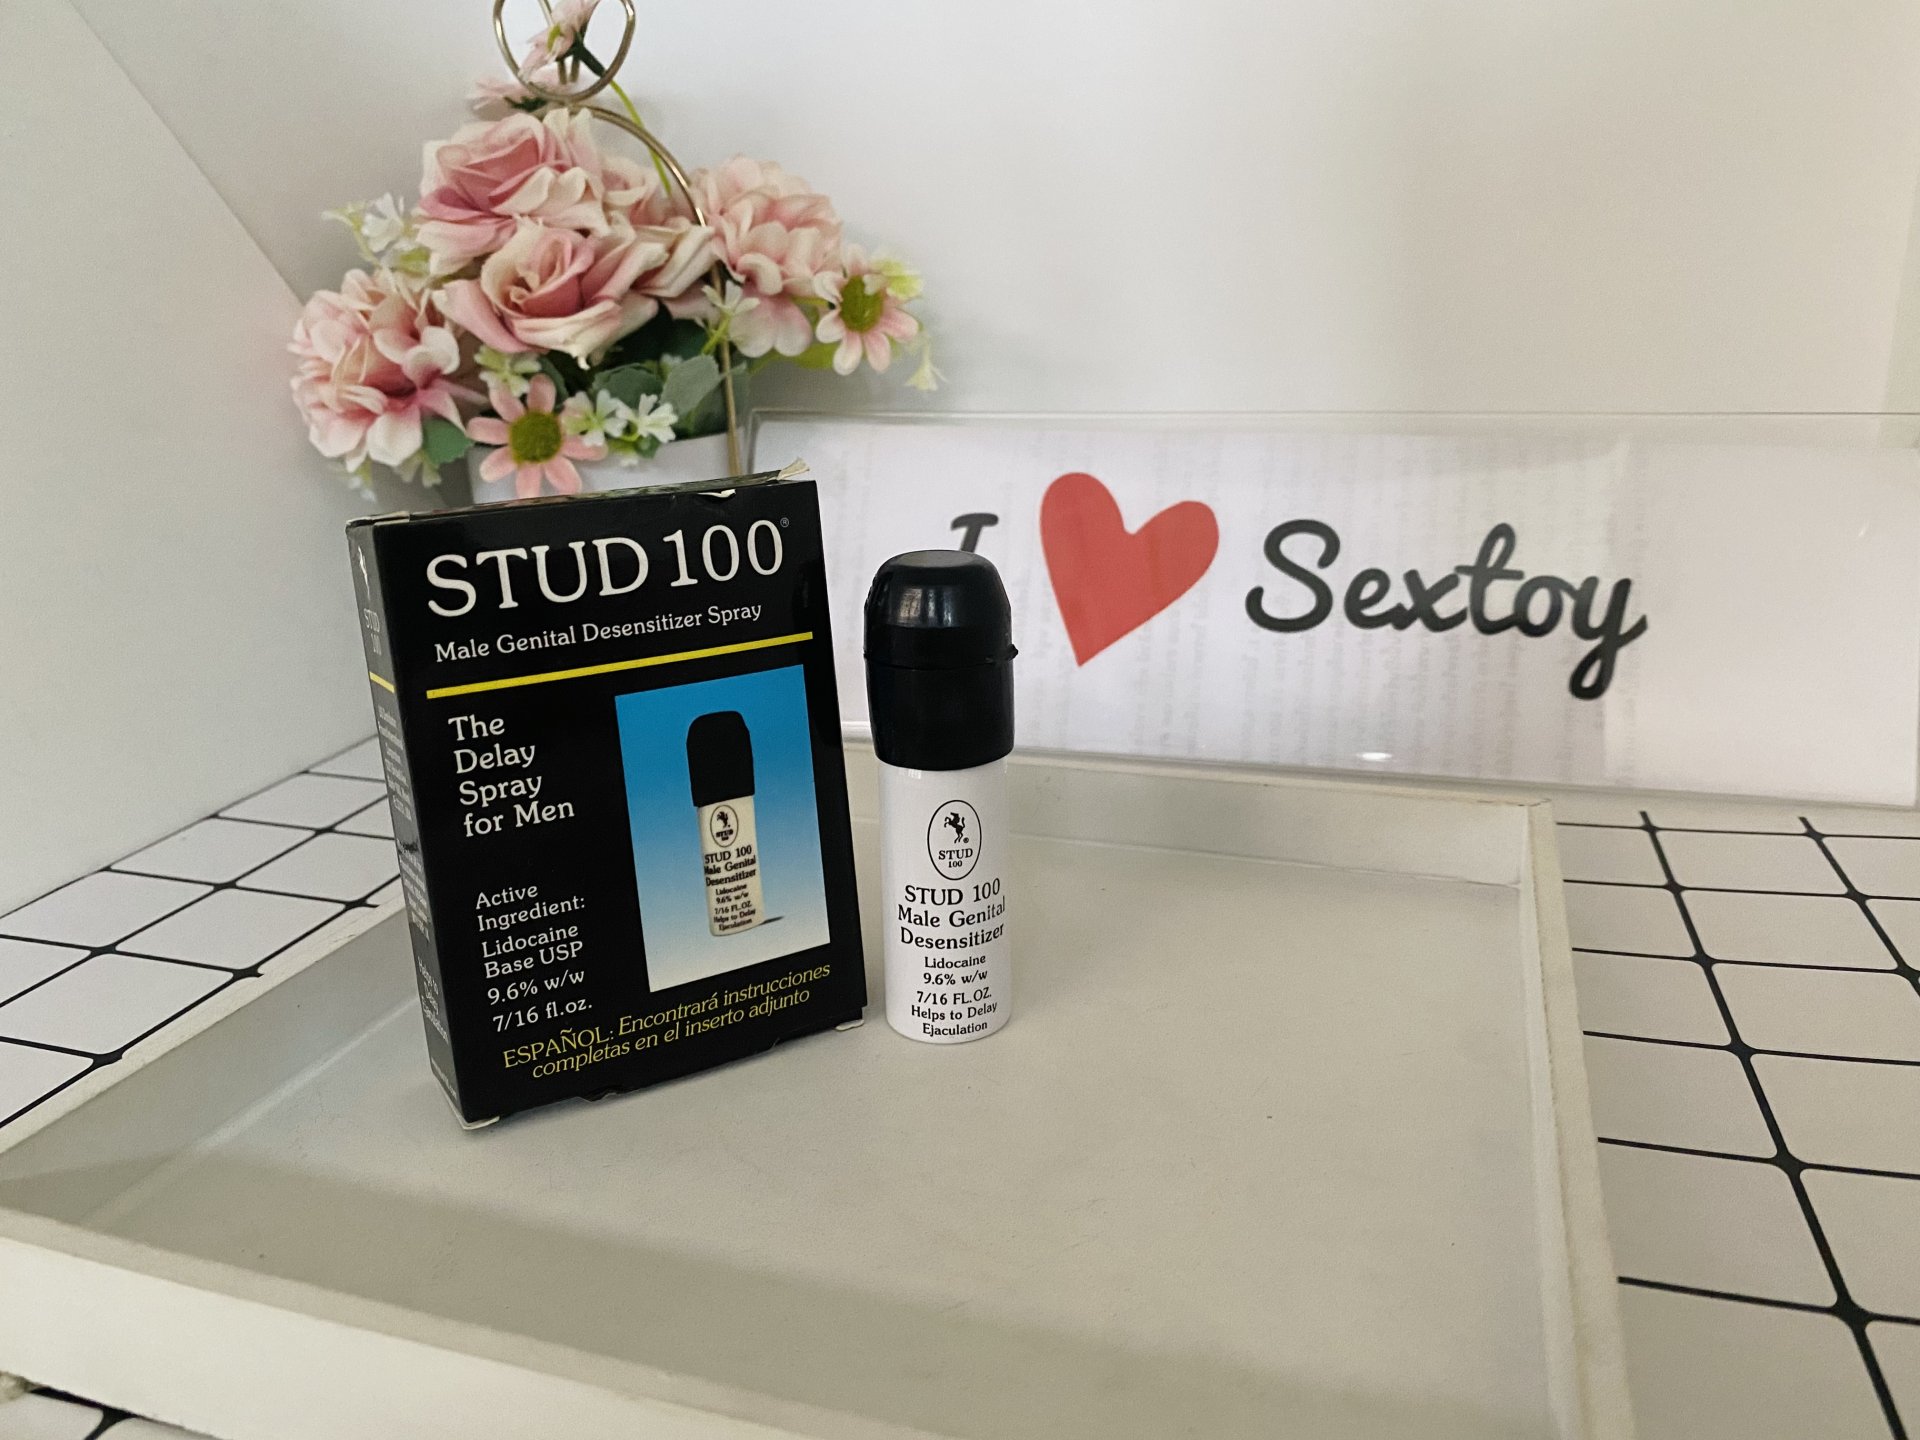 STUD 100, long-lasting drug spray